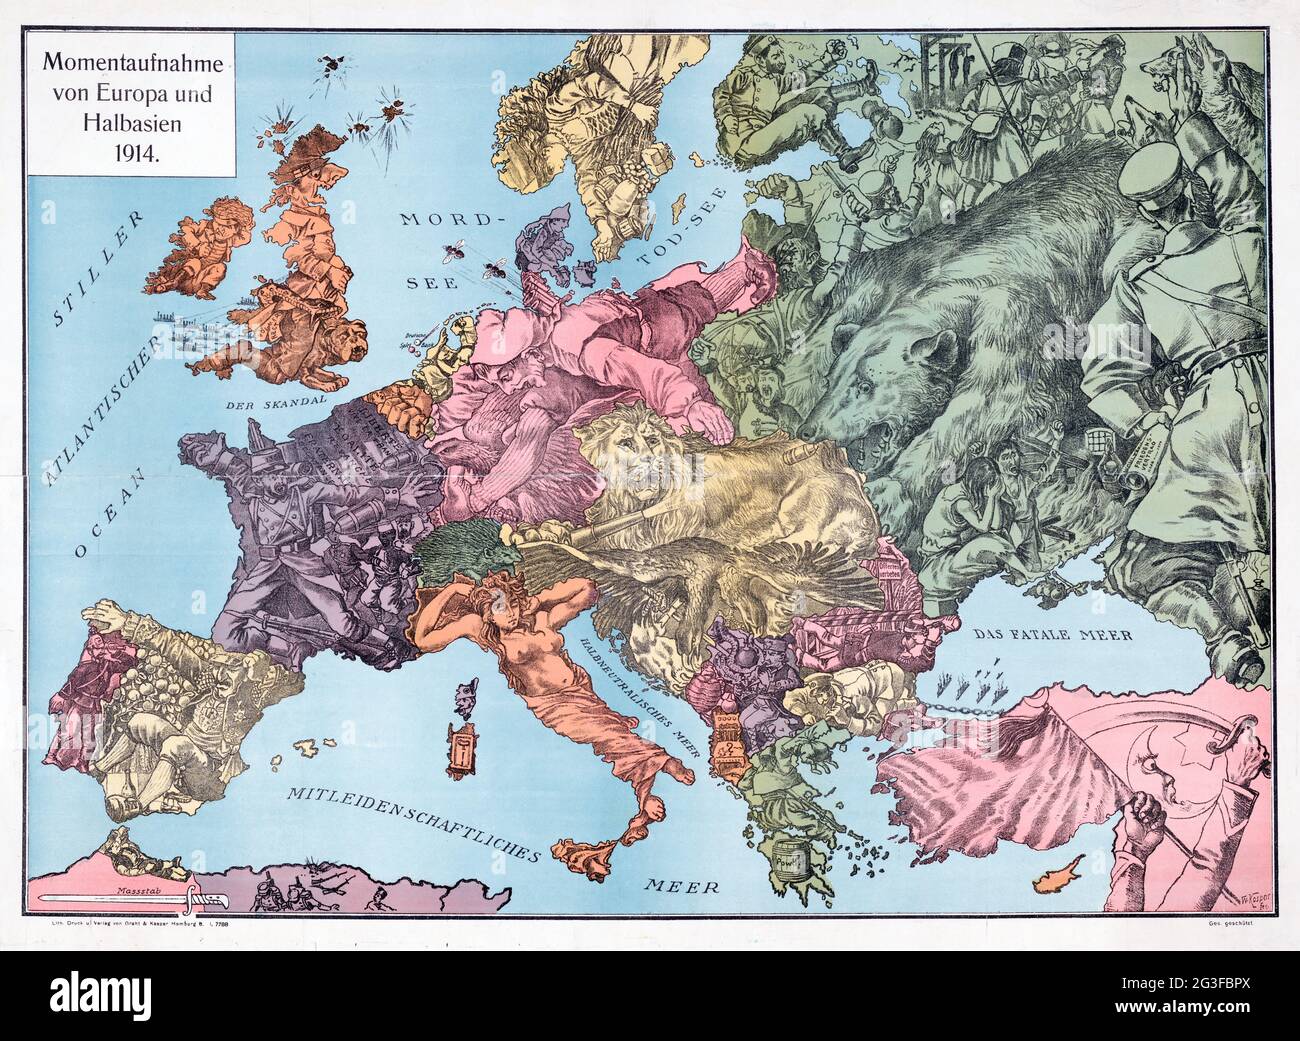 Carte européenne carte satirique Momentaufnahme von Europa und Halbasien 1914 – carte de l'Europe Banque D'Images